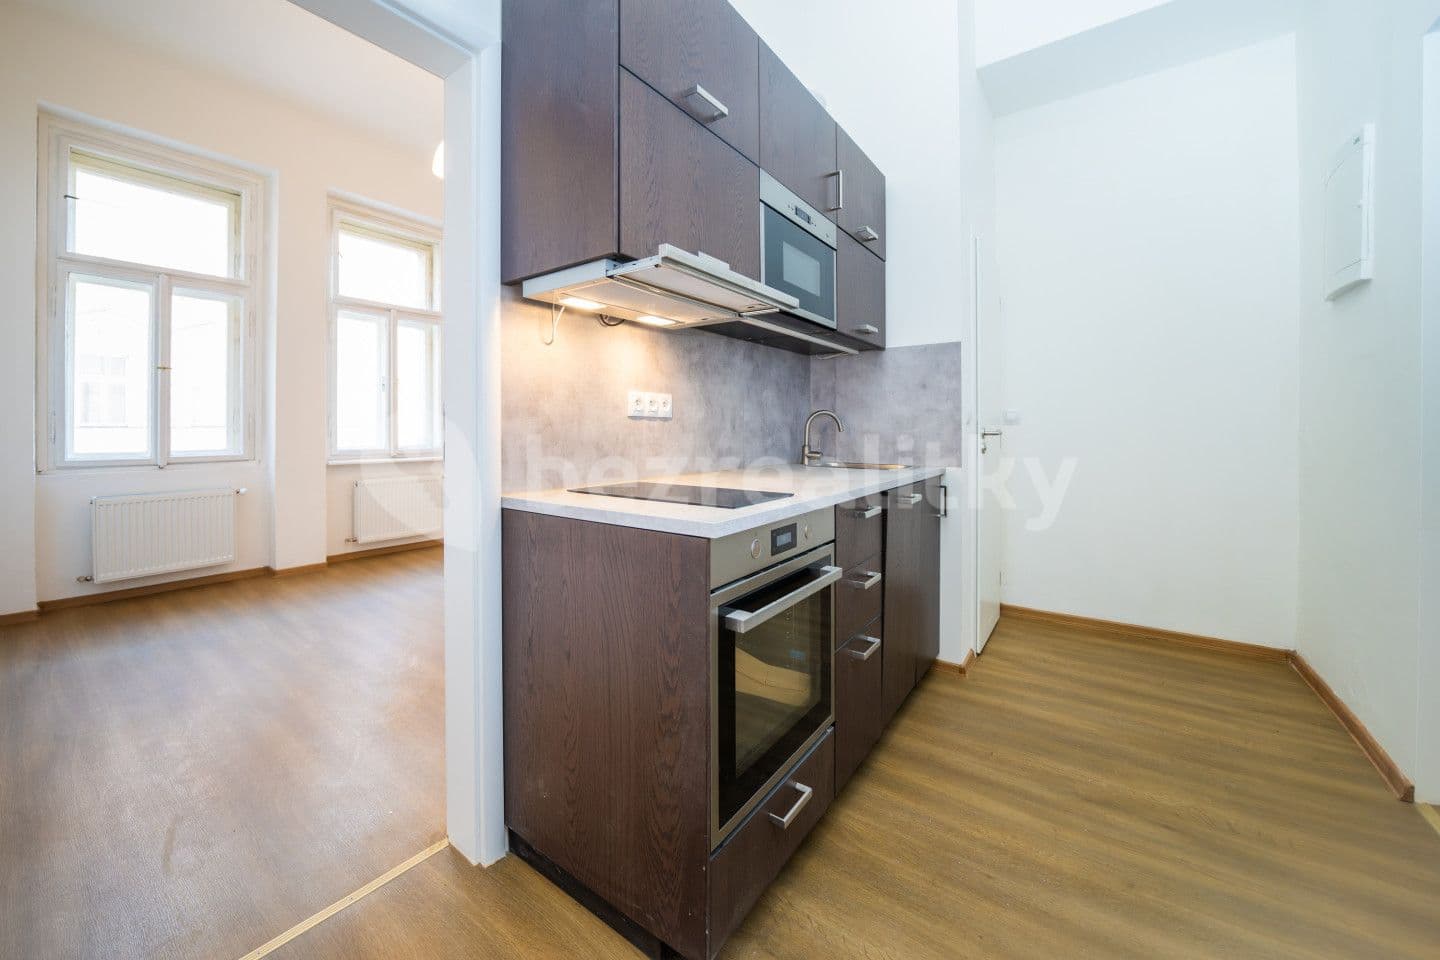 1 bedroom with open-plan kitchen flat for sale, 47 m², Sokolská, Prague, Prague